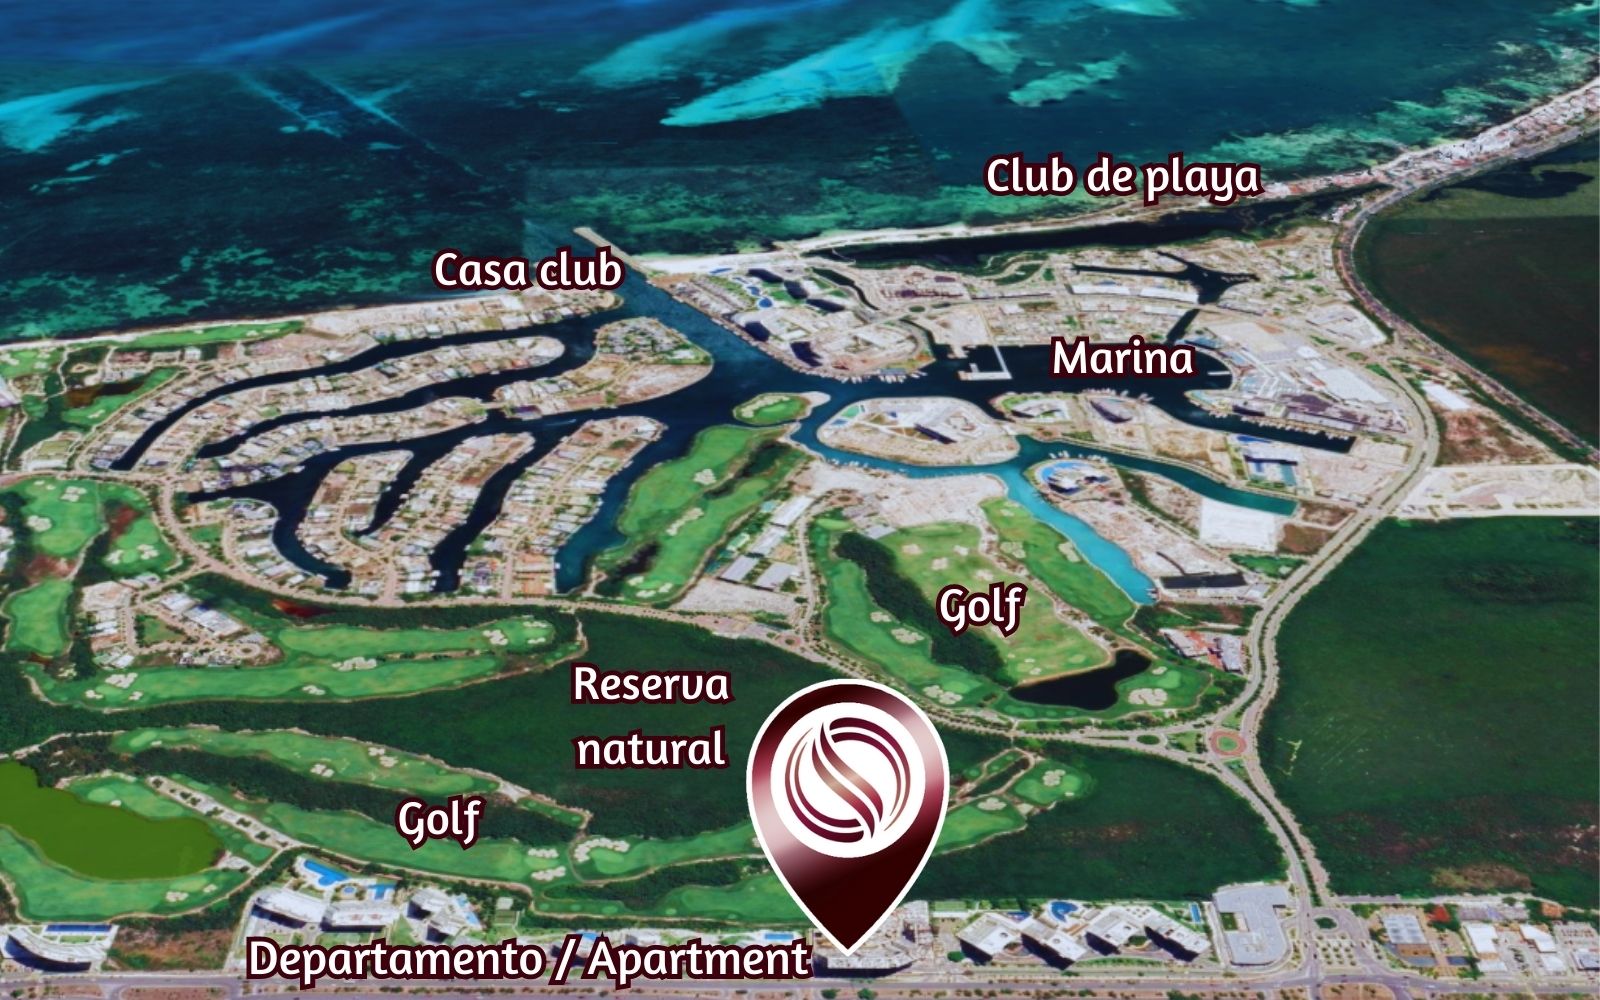 Condominium overlooking the lagoon, beach club, paddle, for pre-sale Cancun